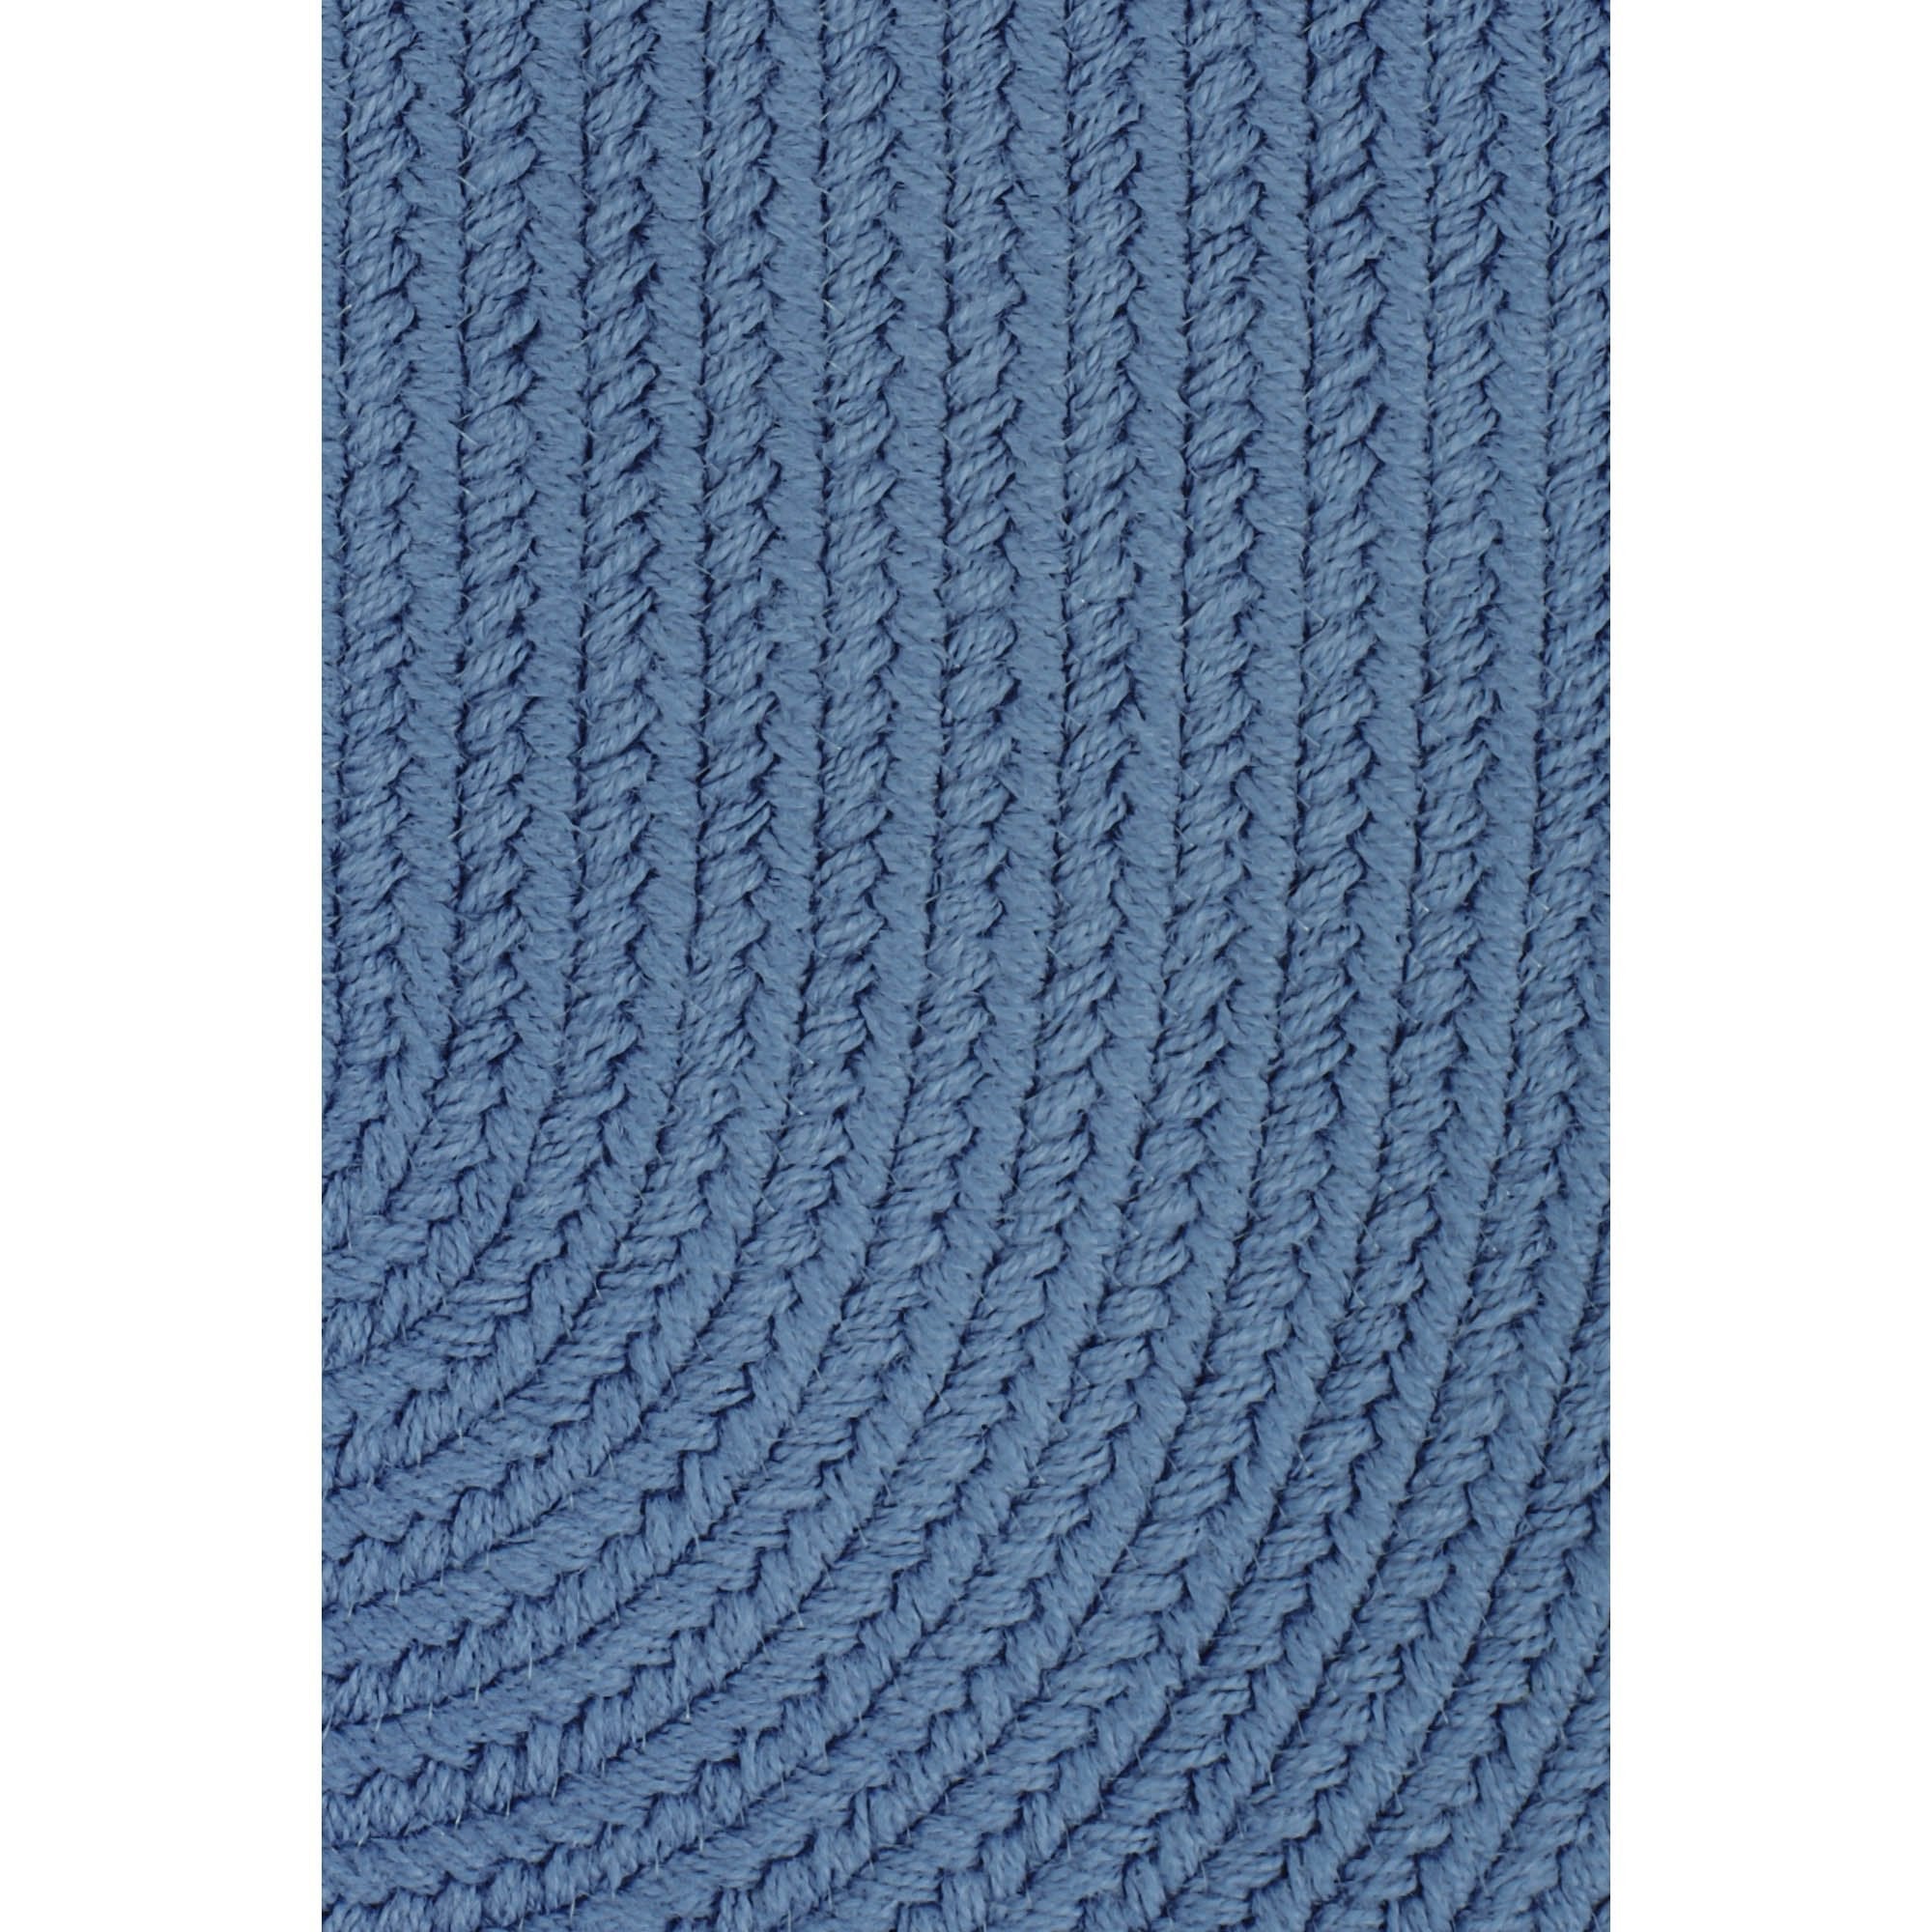 Maui Braided Ultra Durable Outdoor Rug #color_marina blue